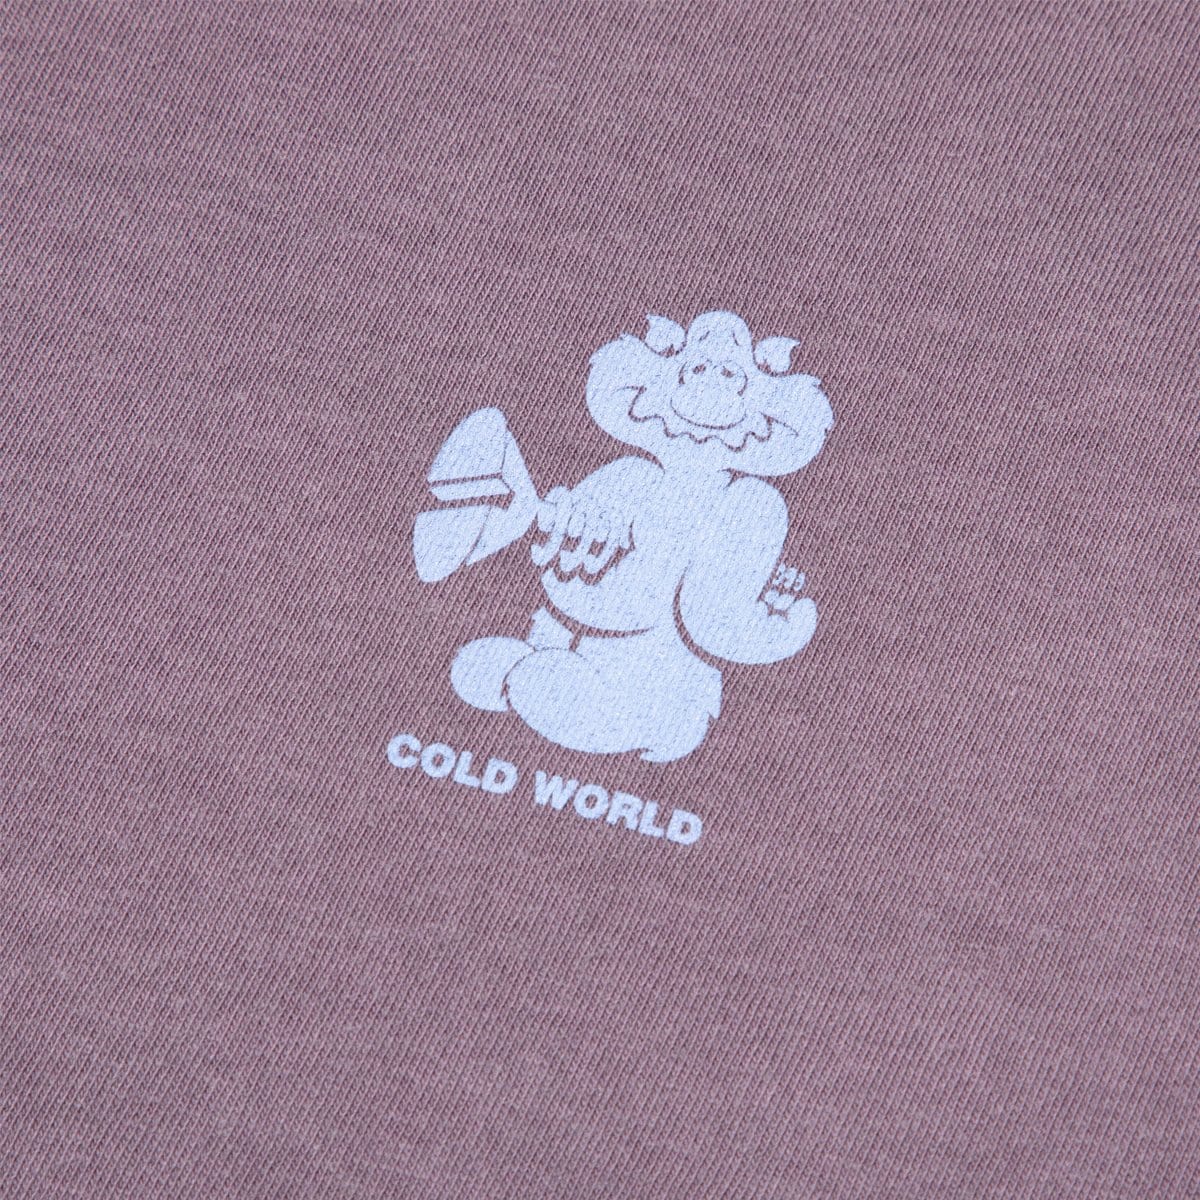 Cold World Frozen Goods T-Shirts SCREWED UP TEE